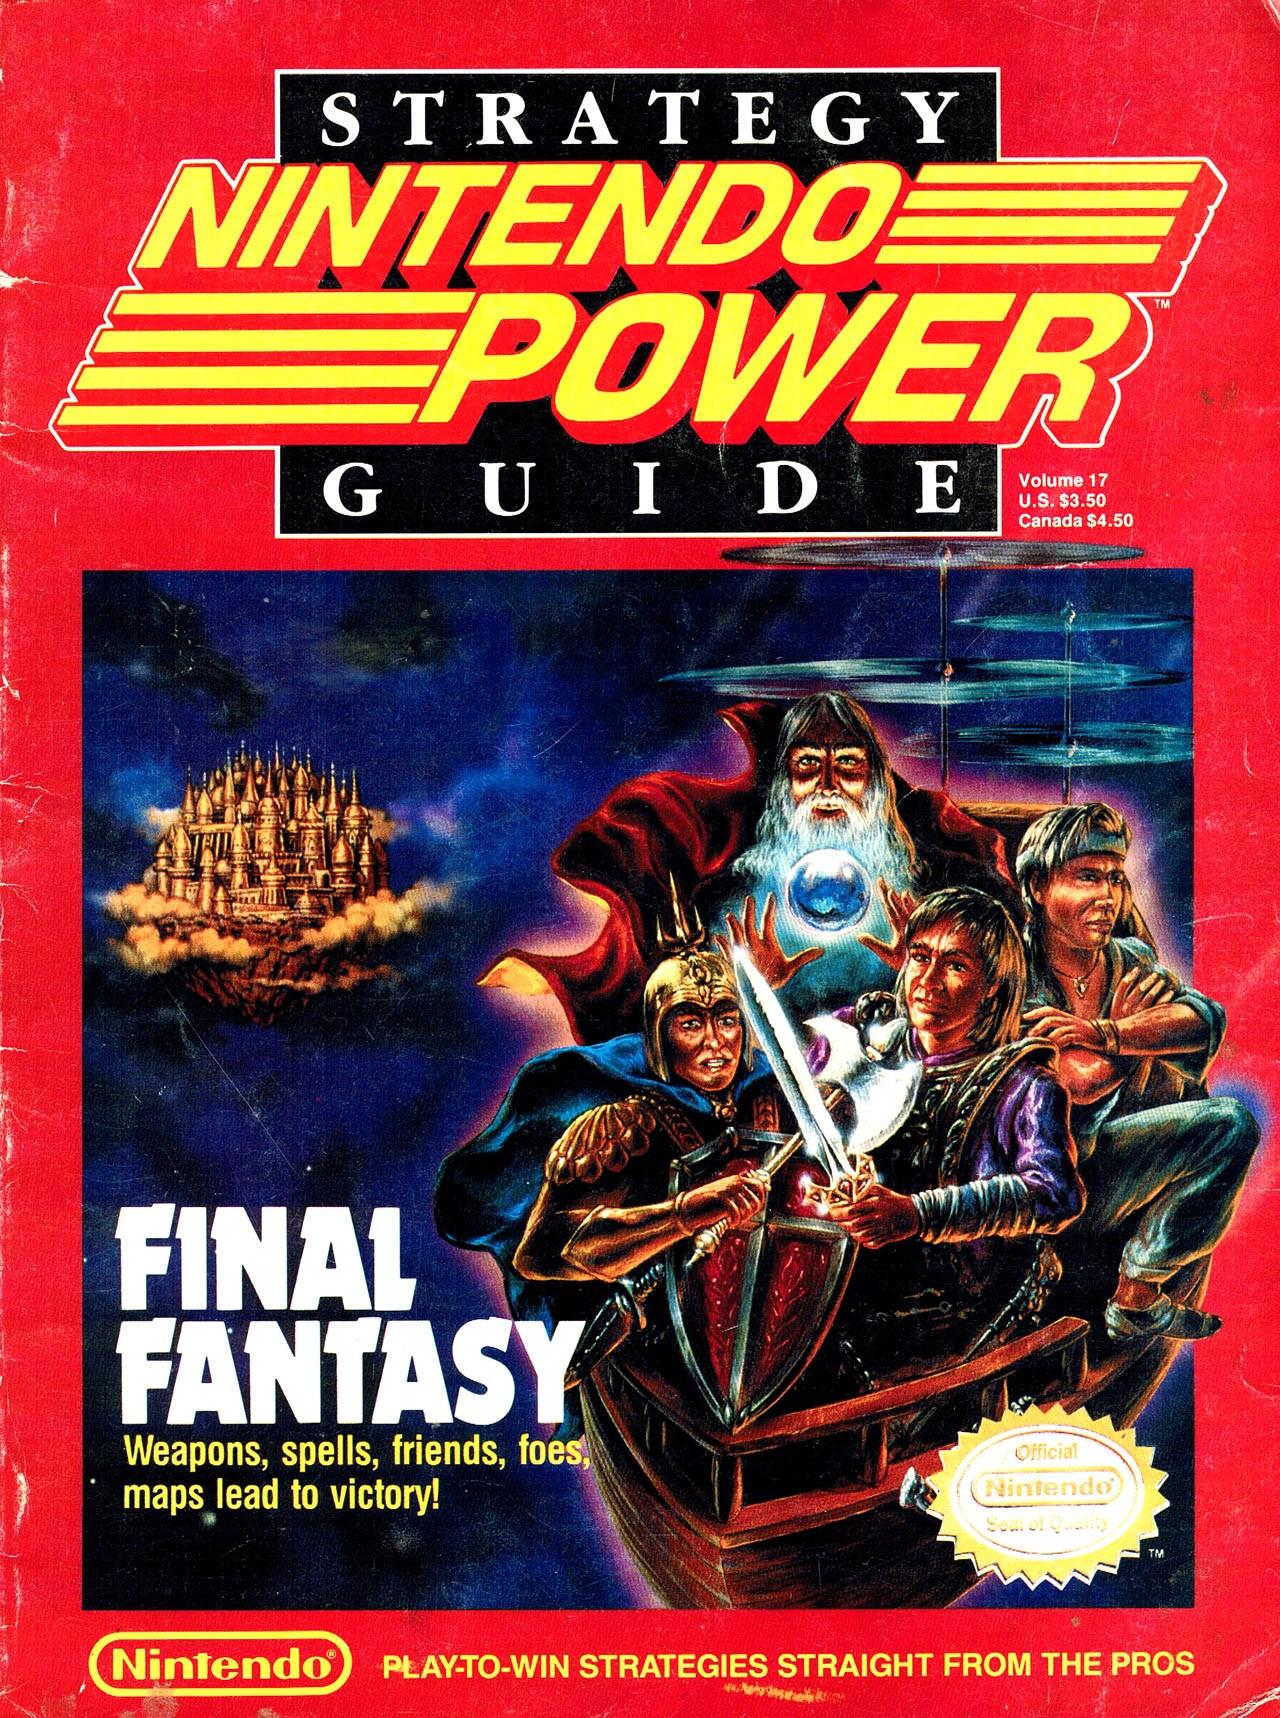 magazine-nintendo-power-guides-final-fantasy-v1-3-of-6-1990_10-page-1.jpg